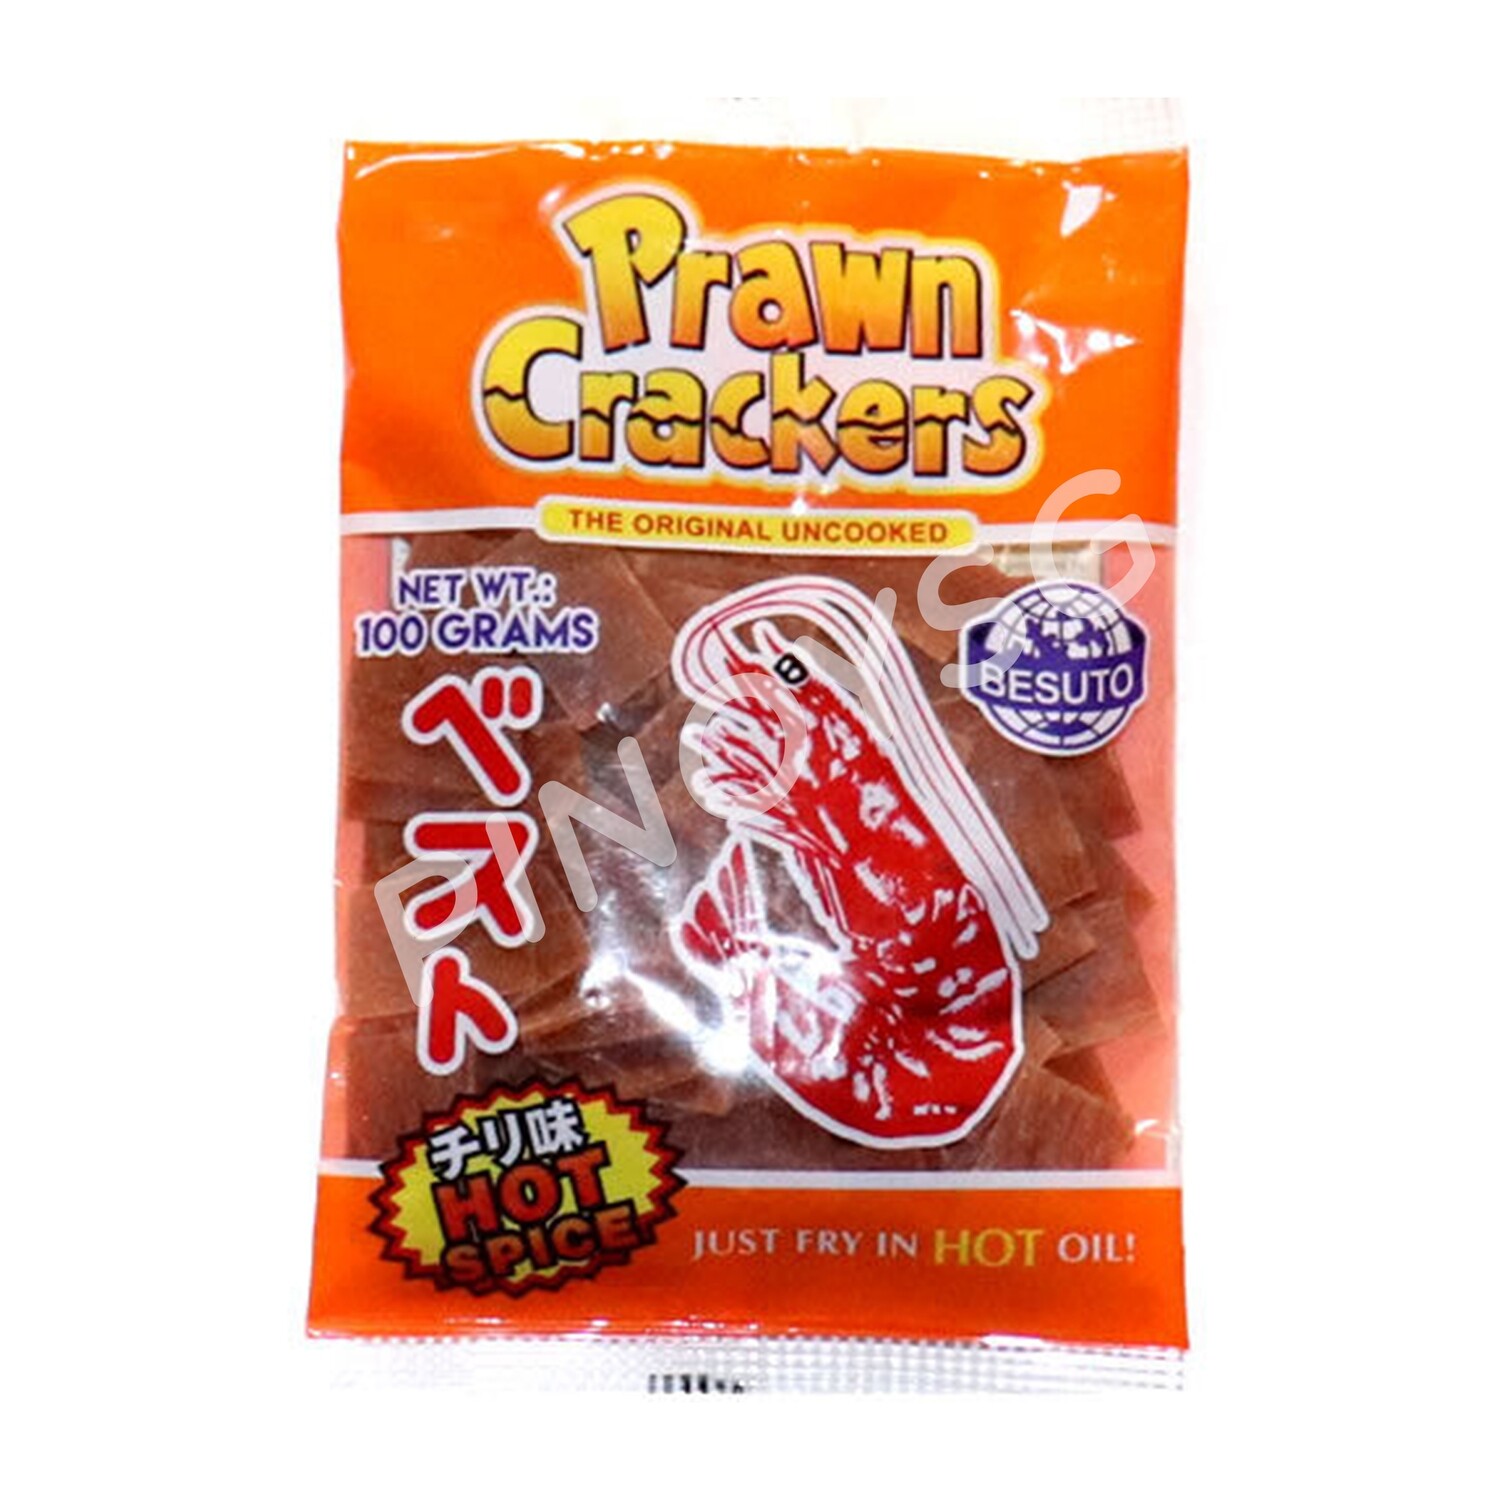 Besuto Prawn Crackers Hot & Spicy 100g